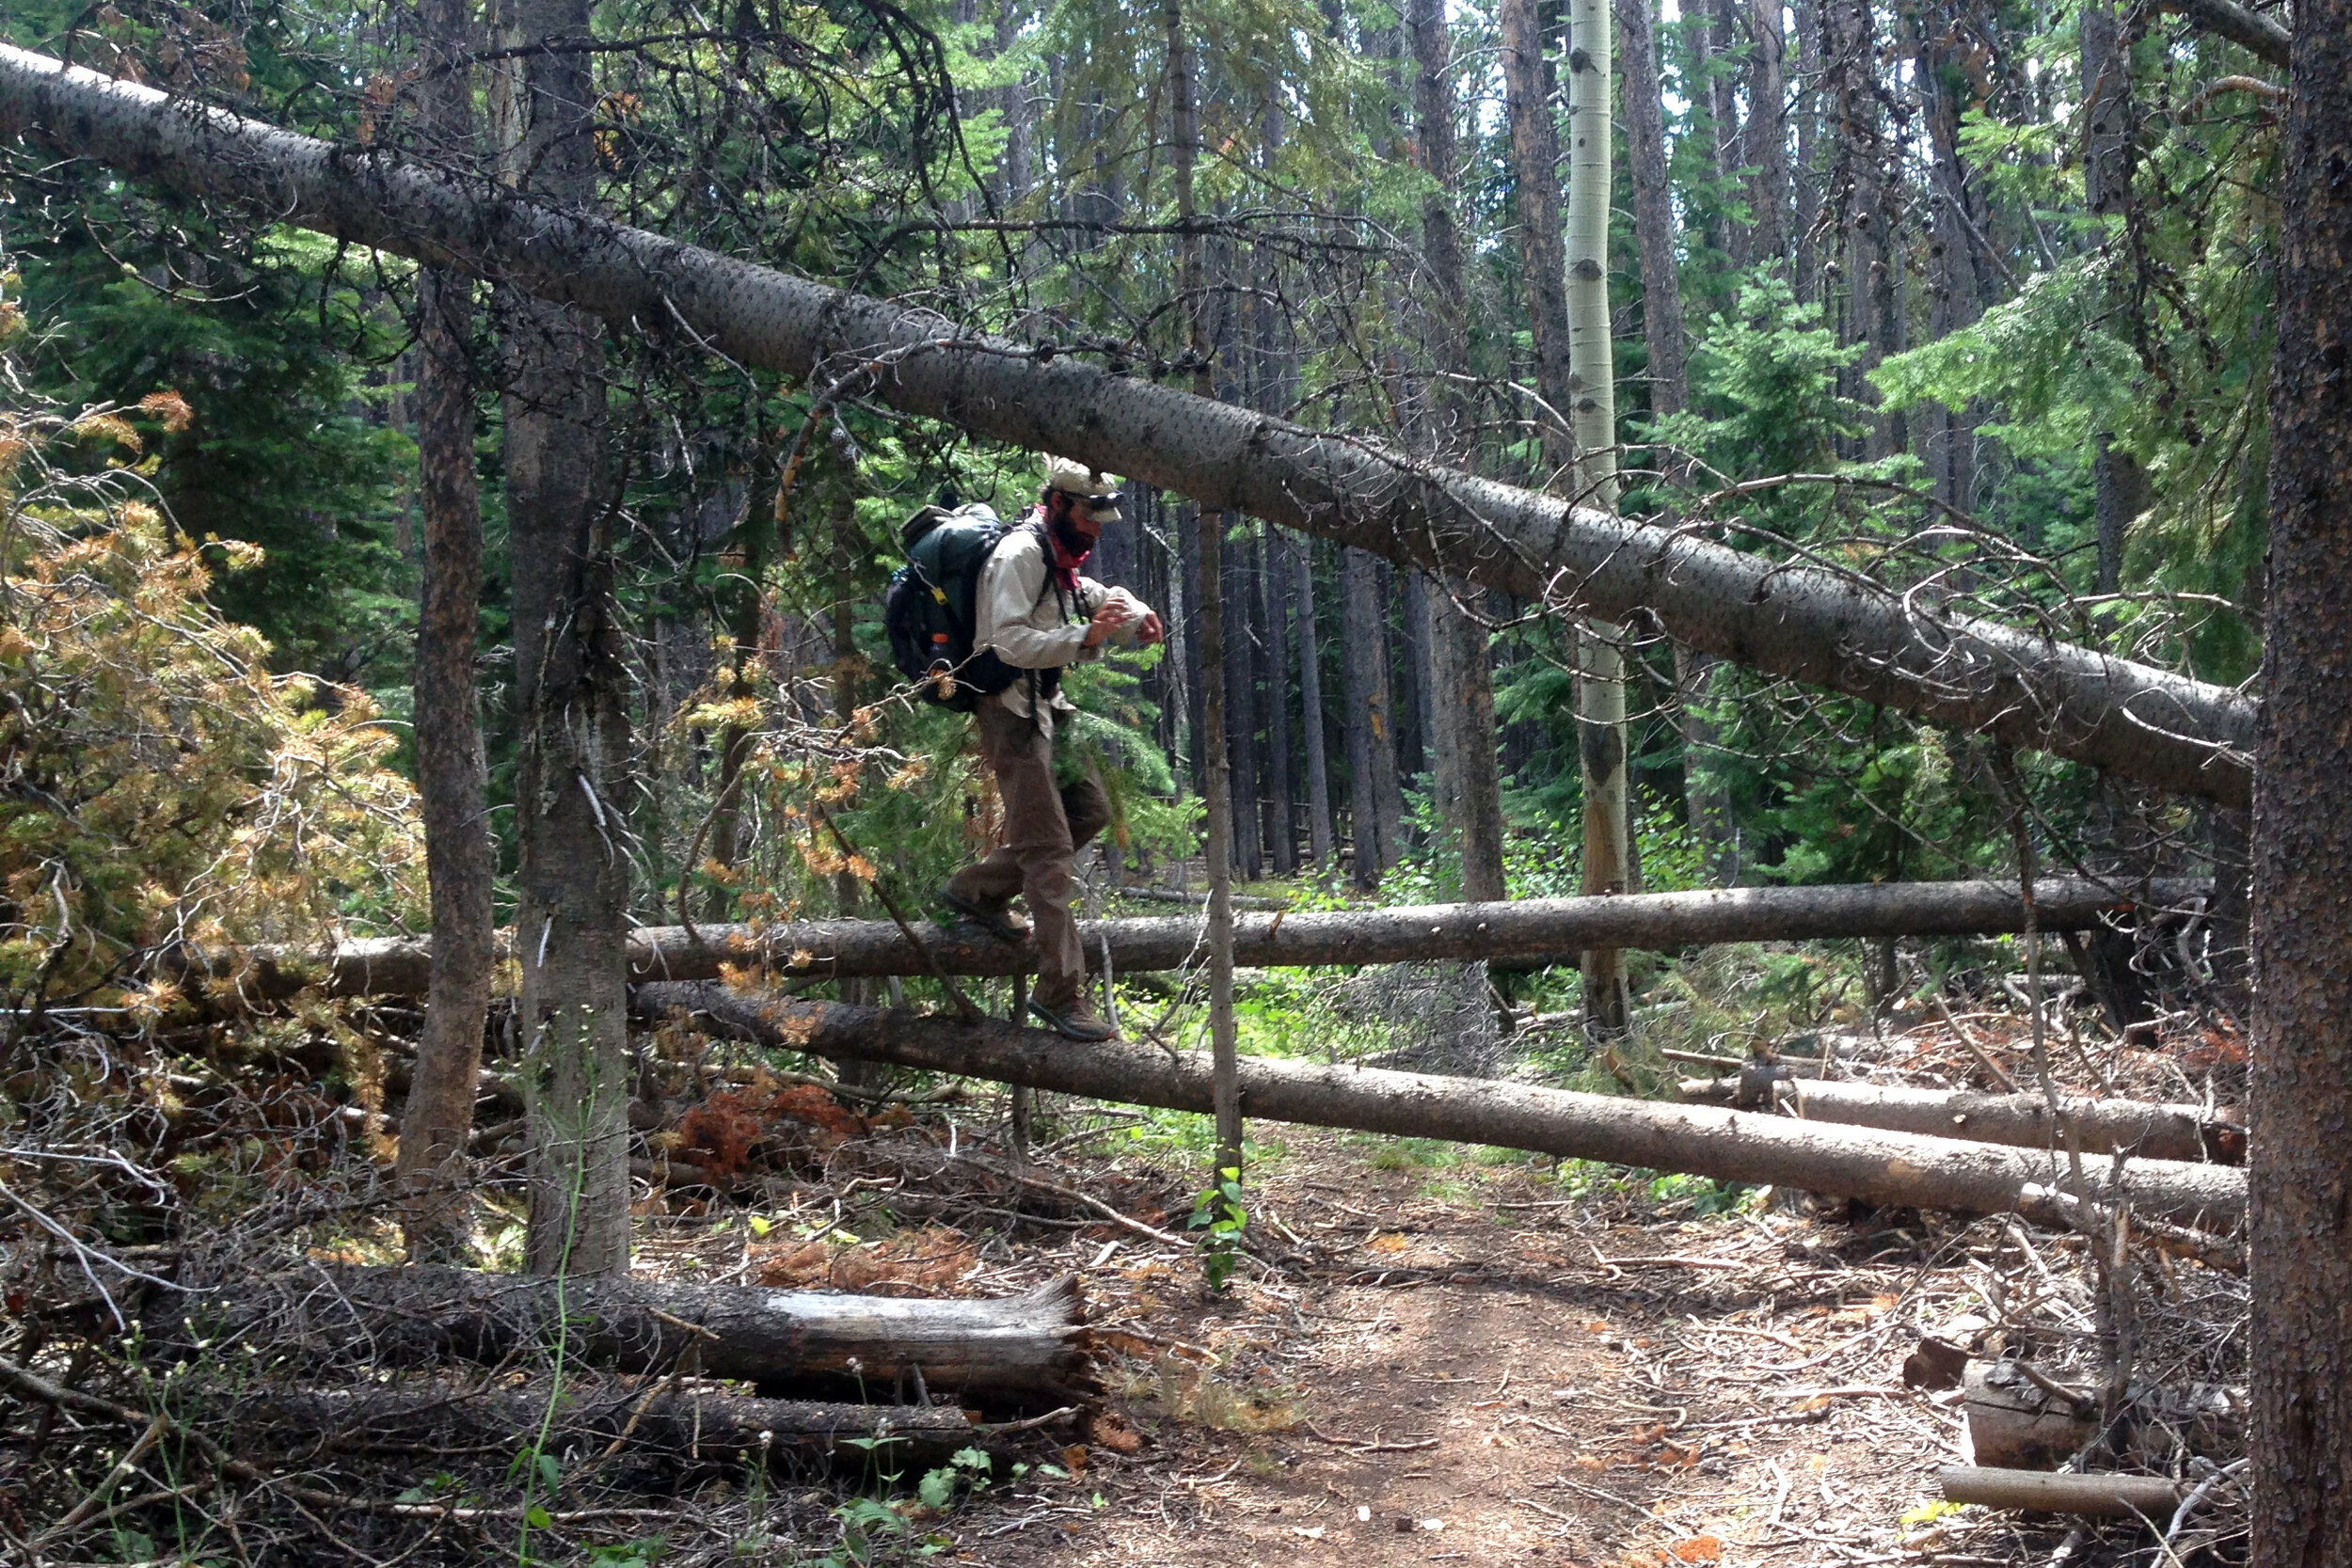 Downed trees, creek crossings, boulder hopping, steep grades - no problem!